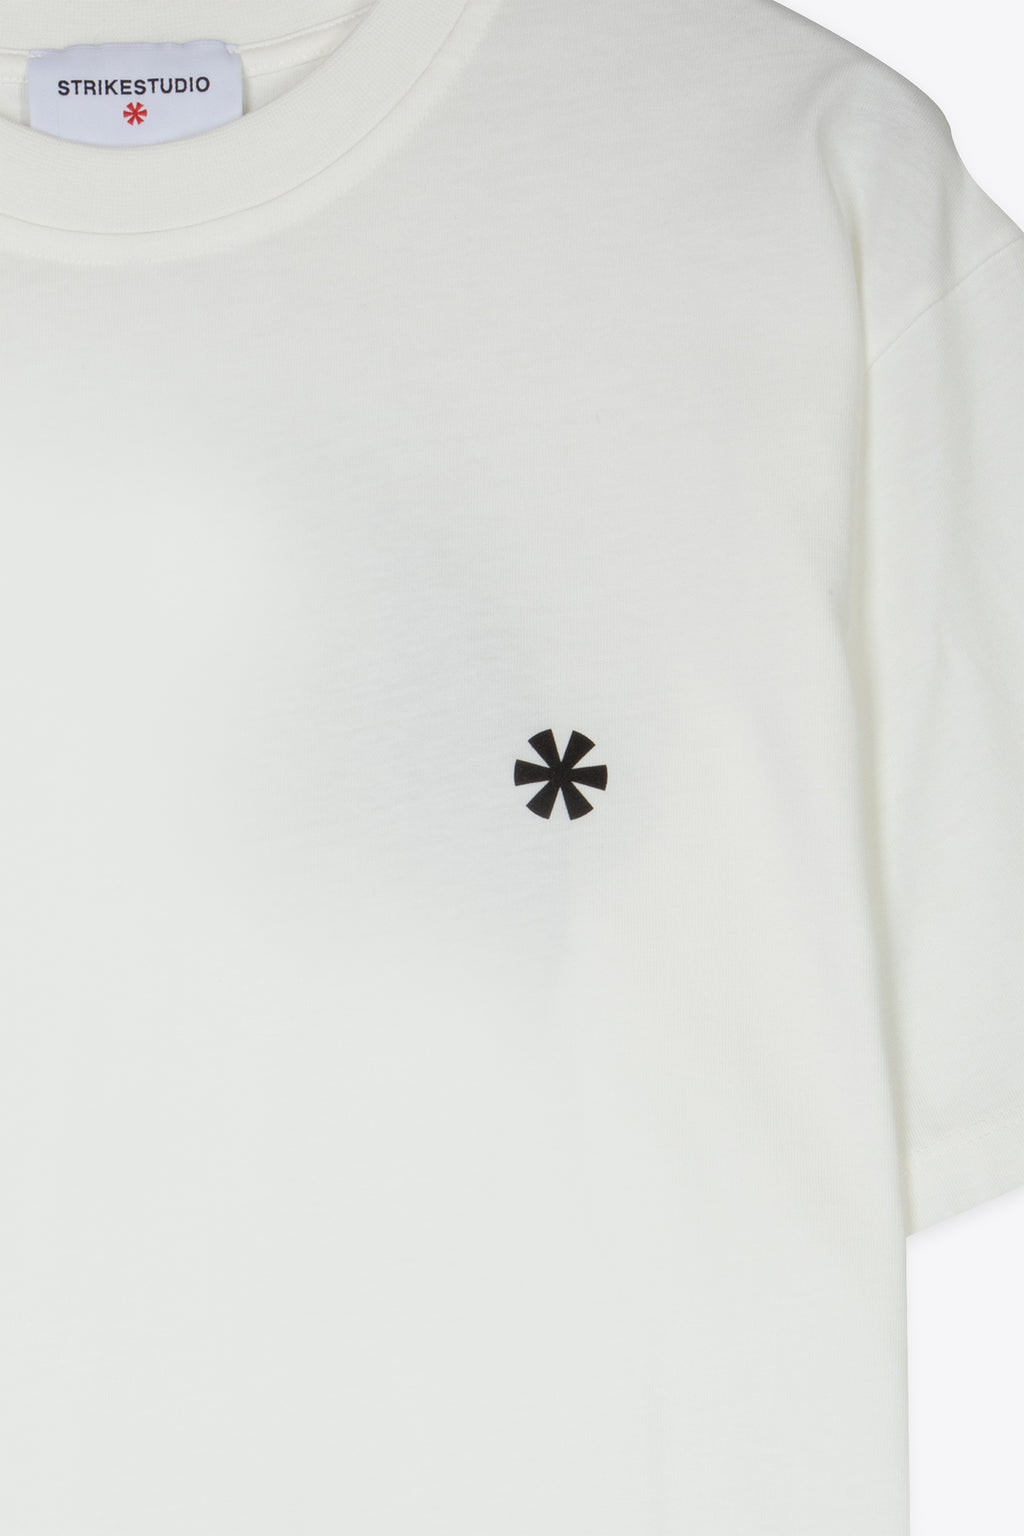 alt-image__T-shirt-bianca-in-cotone-con-stampa-sul-retro---Tao-tee